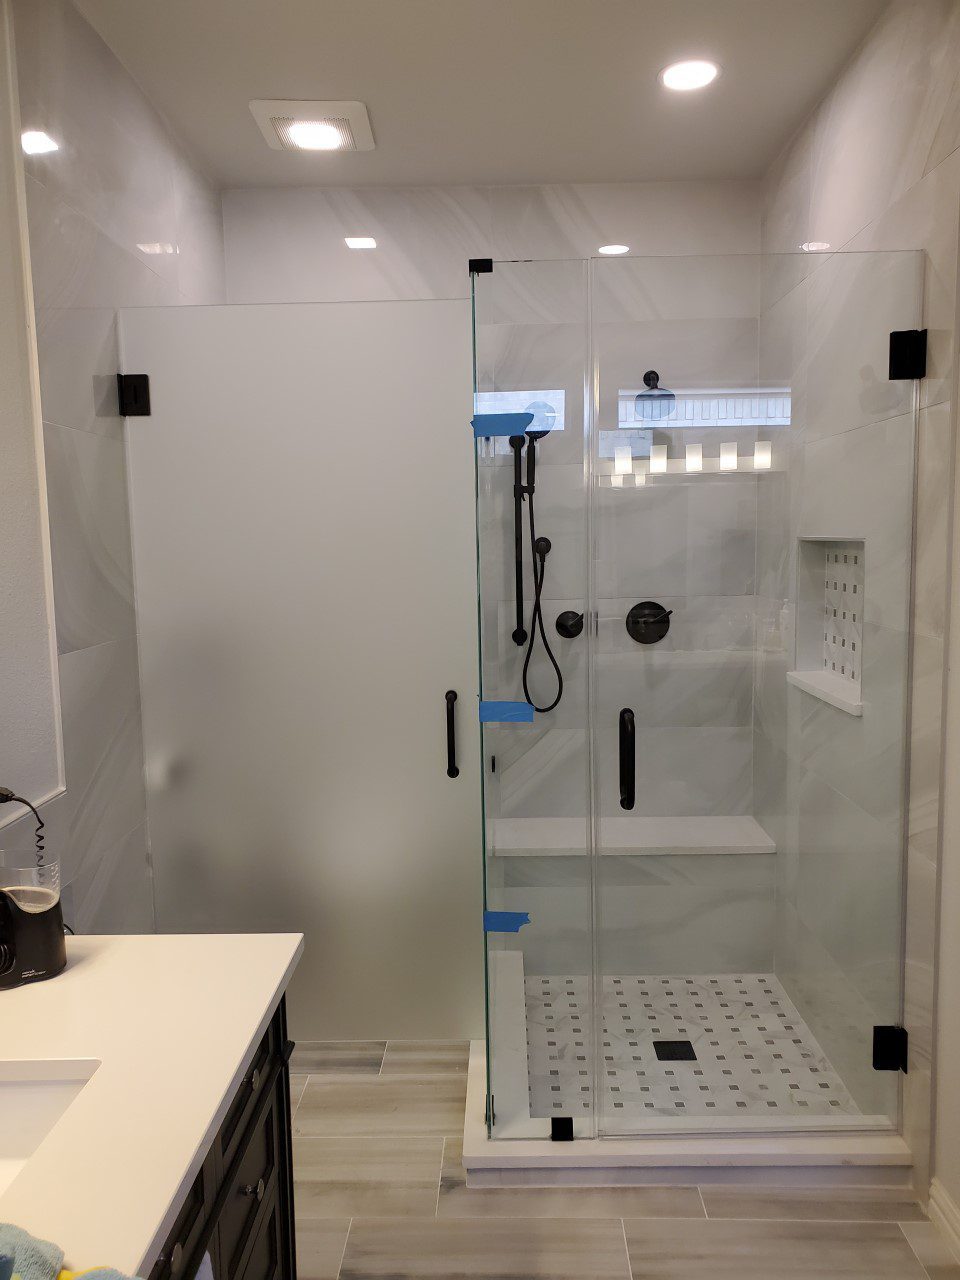 No.1 Best Frameless Shower Glass Doors Services - Plano Bath Lcc